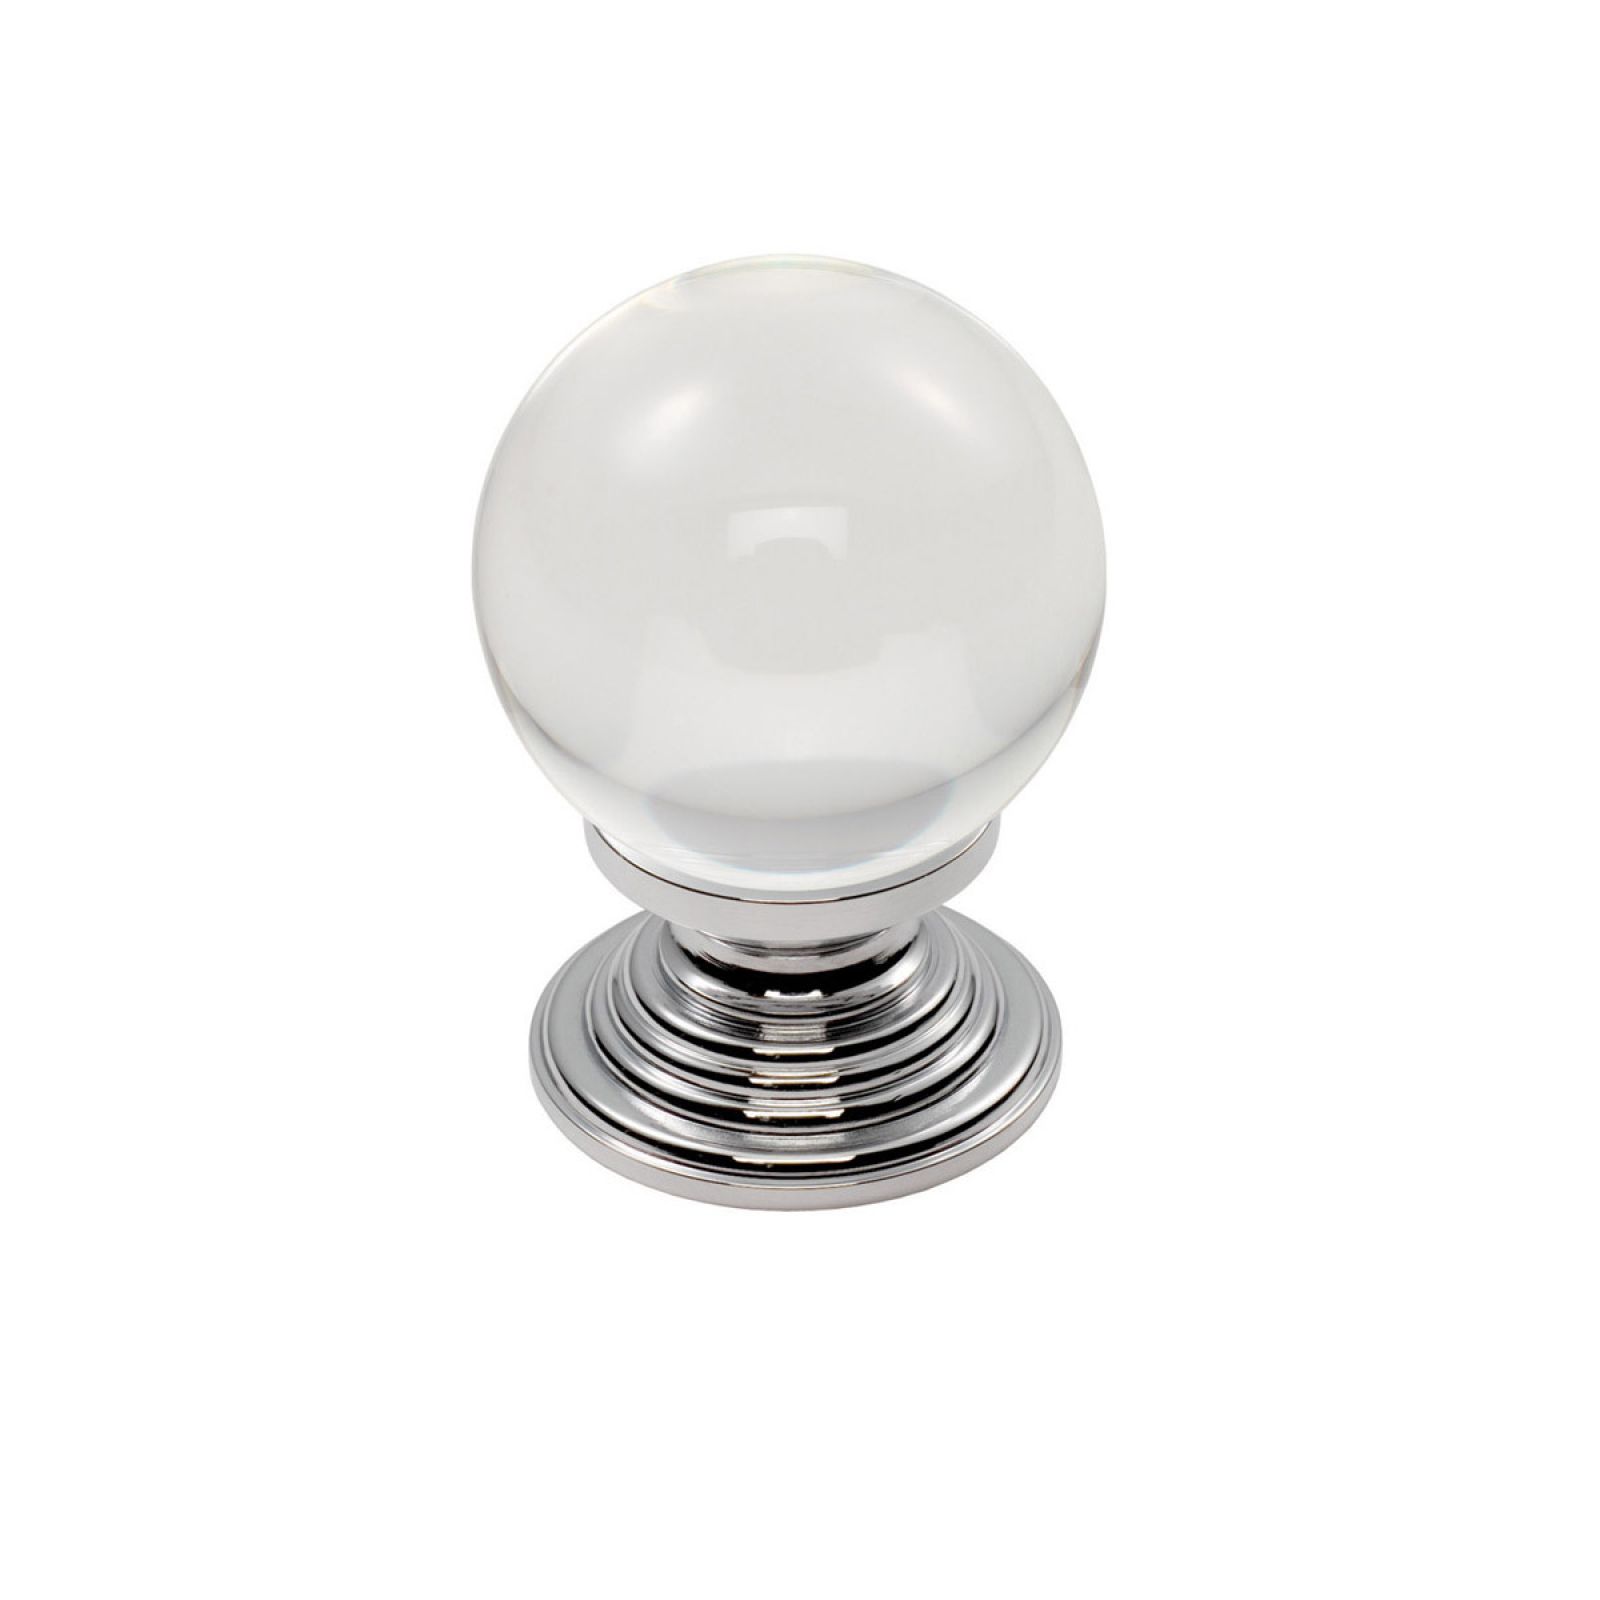 Crystal ball cupboard knob - 27mm or 34mm